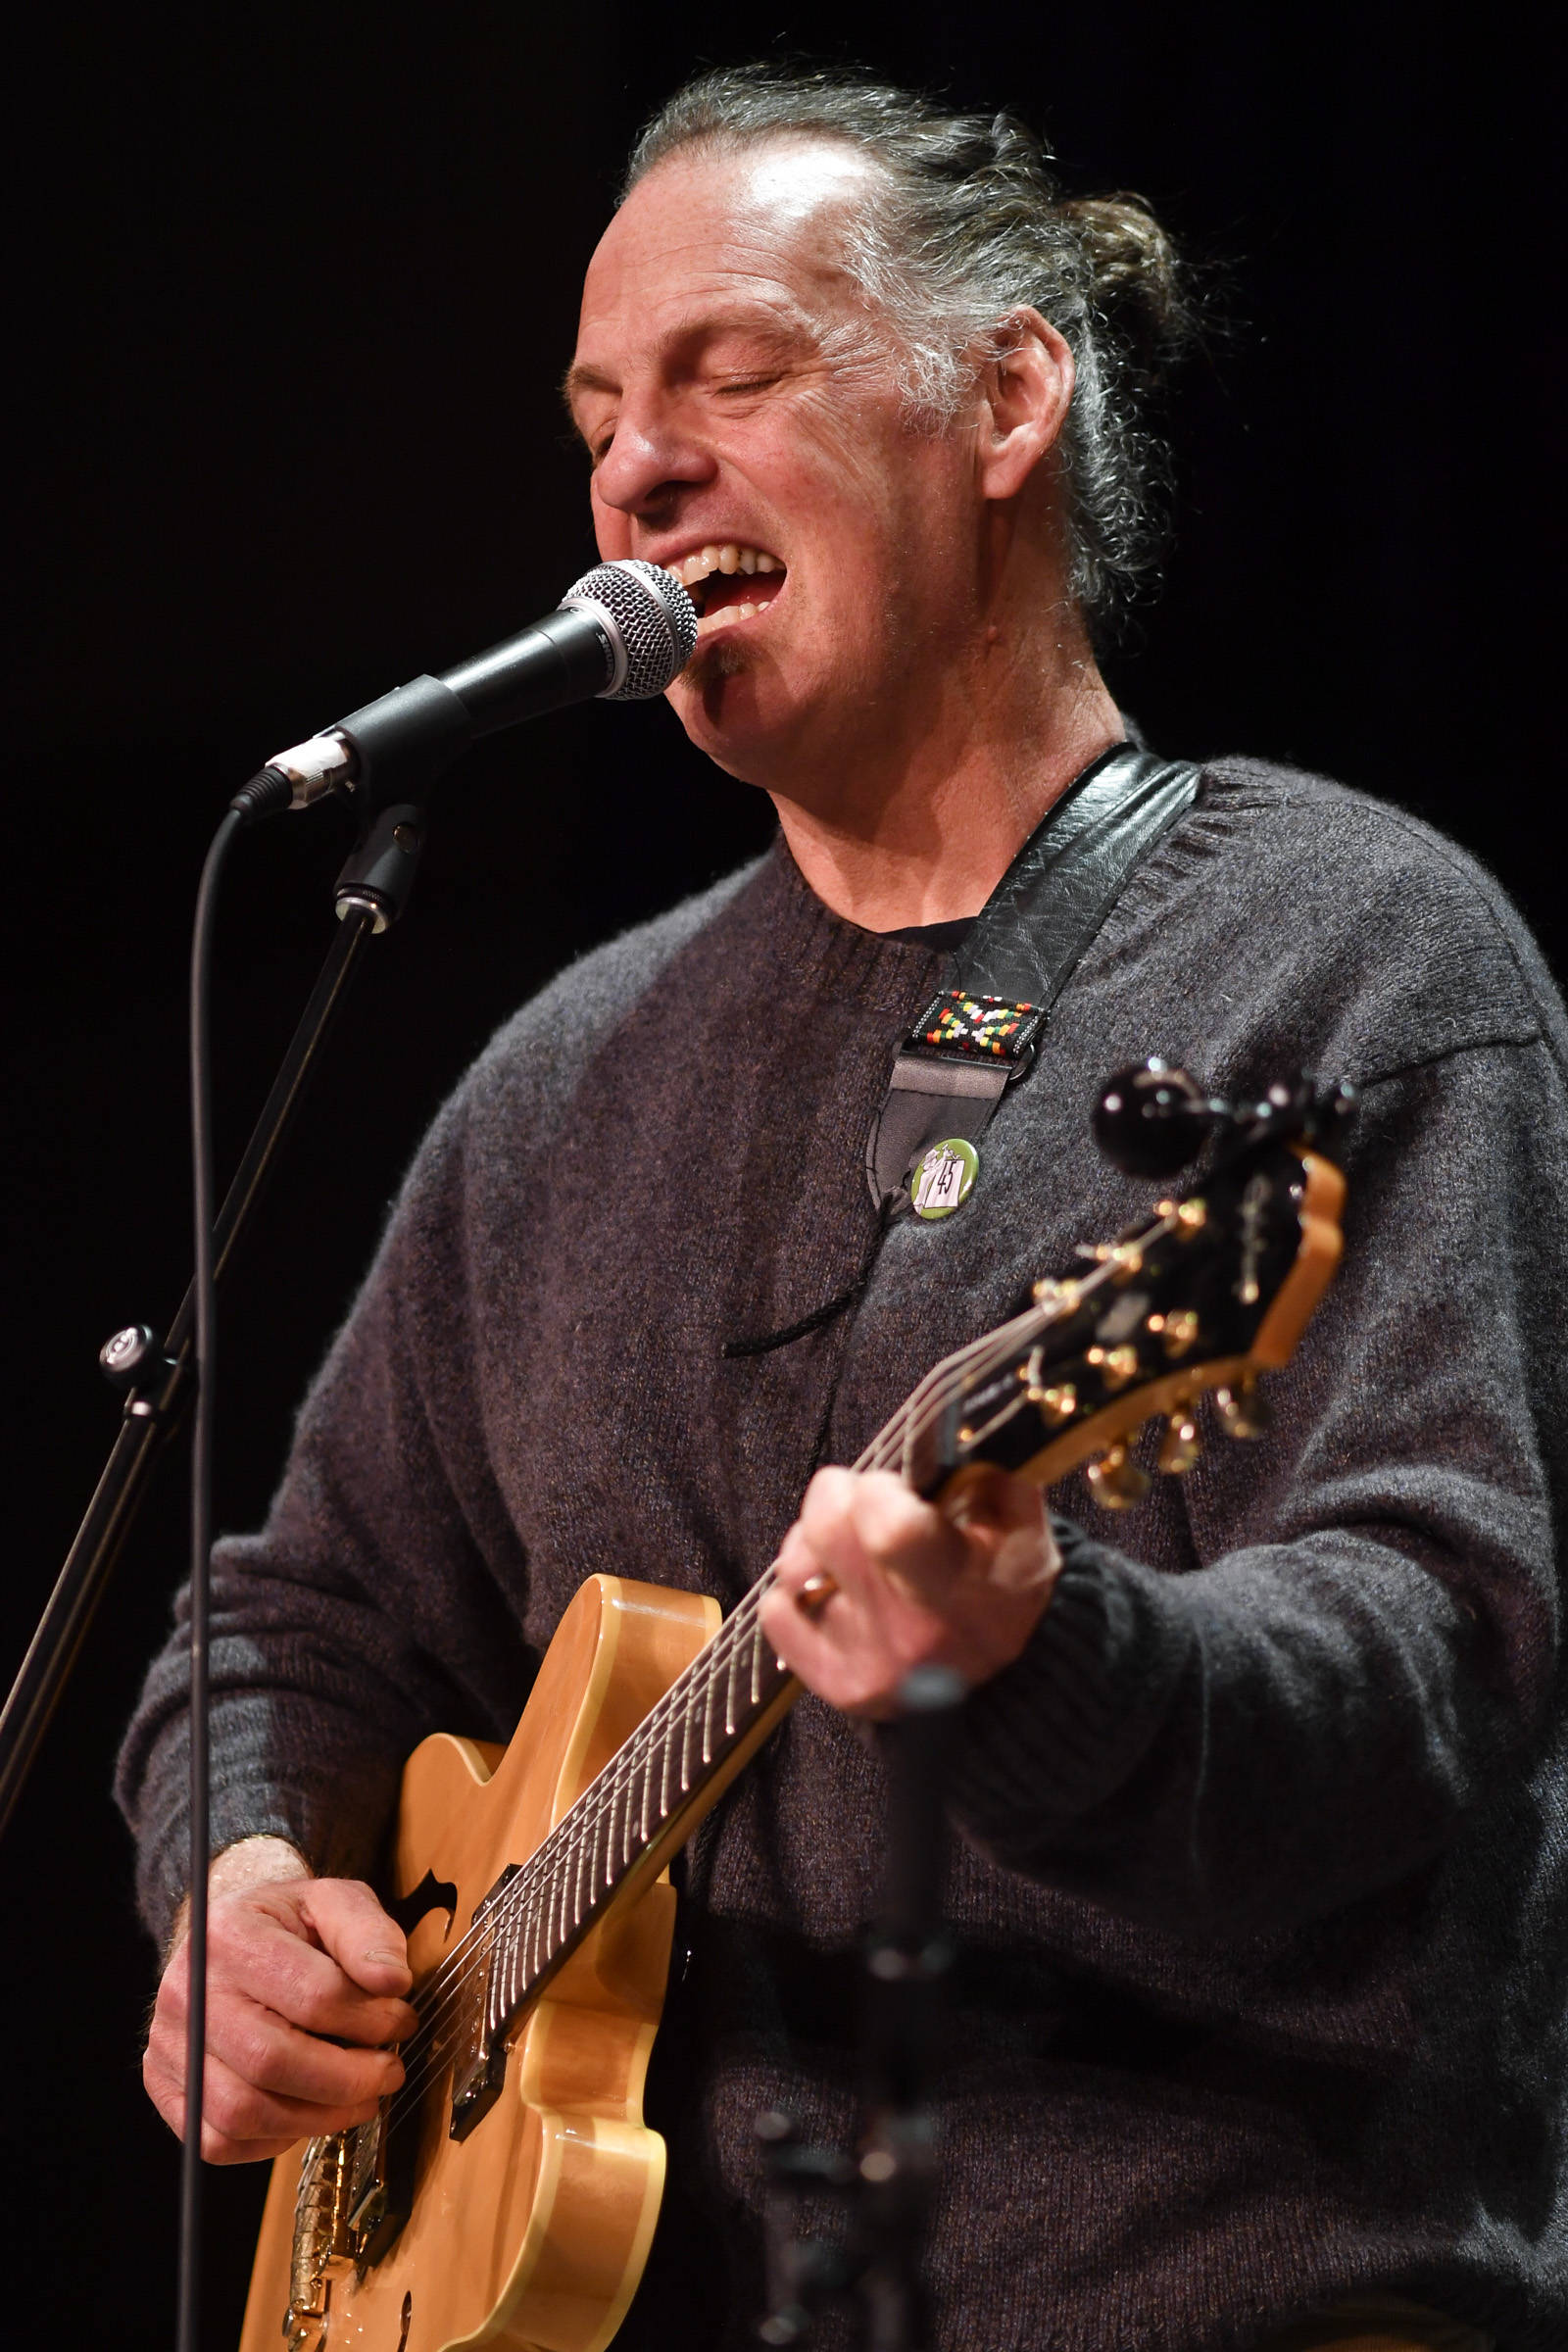 Carl Reese, of Juneau, performs at the 45th annual Alaska Folk Festival at Centennial Hall on Monday, April 8, 2019. (Michael Penn | Juneau Empire)